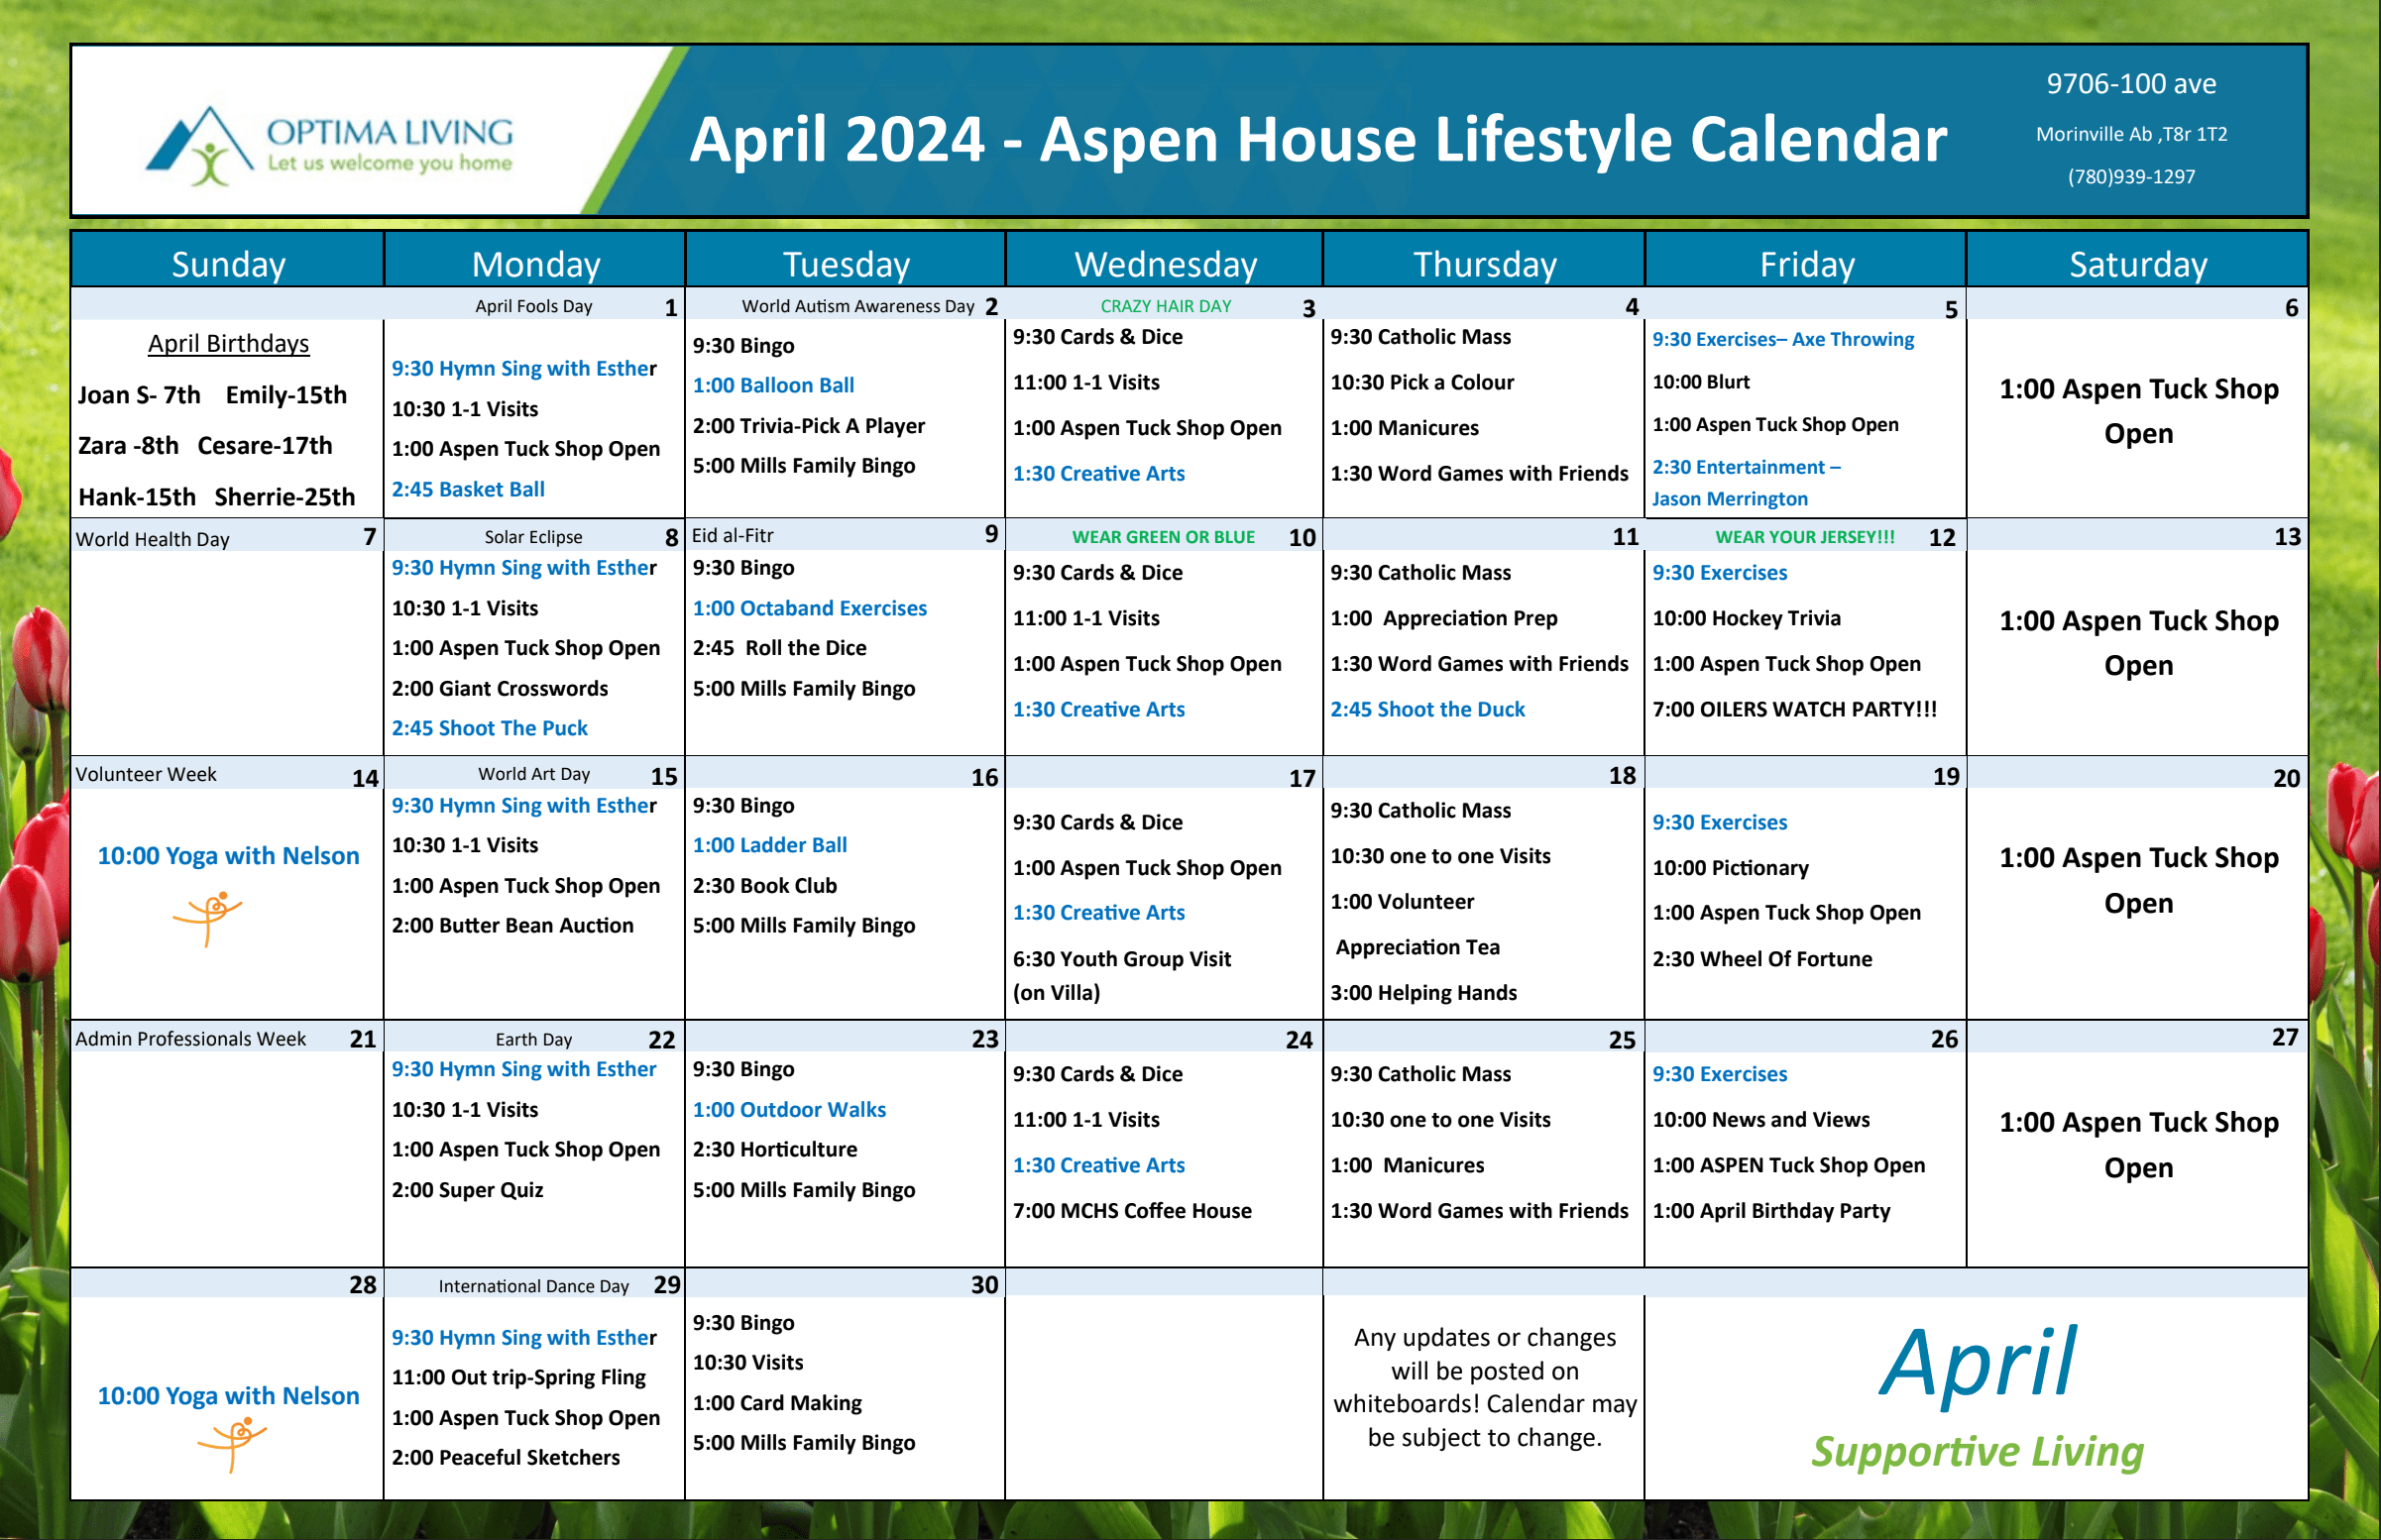 Aspen House April 2024 lifestyle event calendar